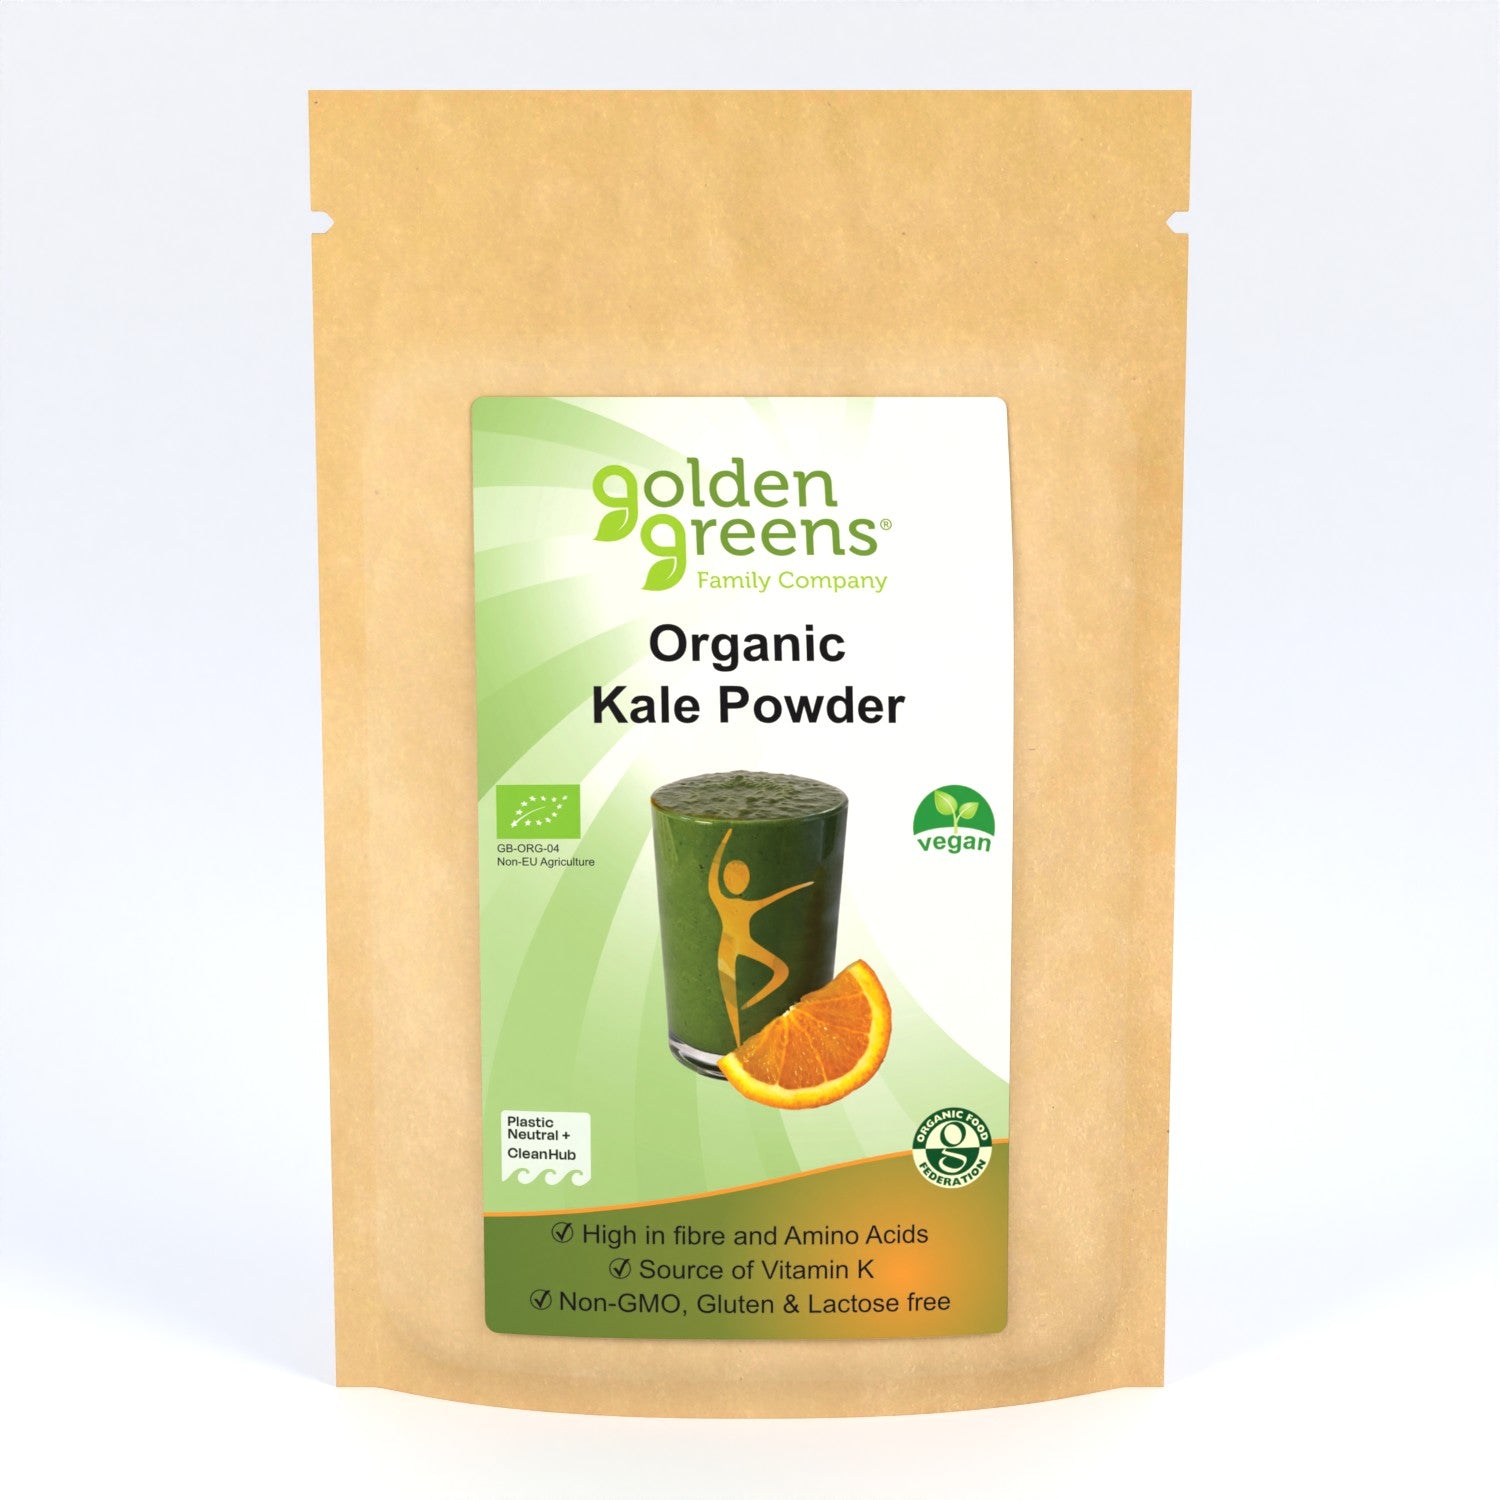 View Organic Kale Powder information